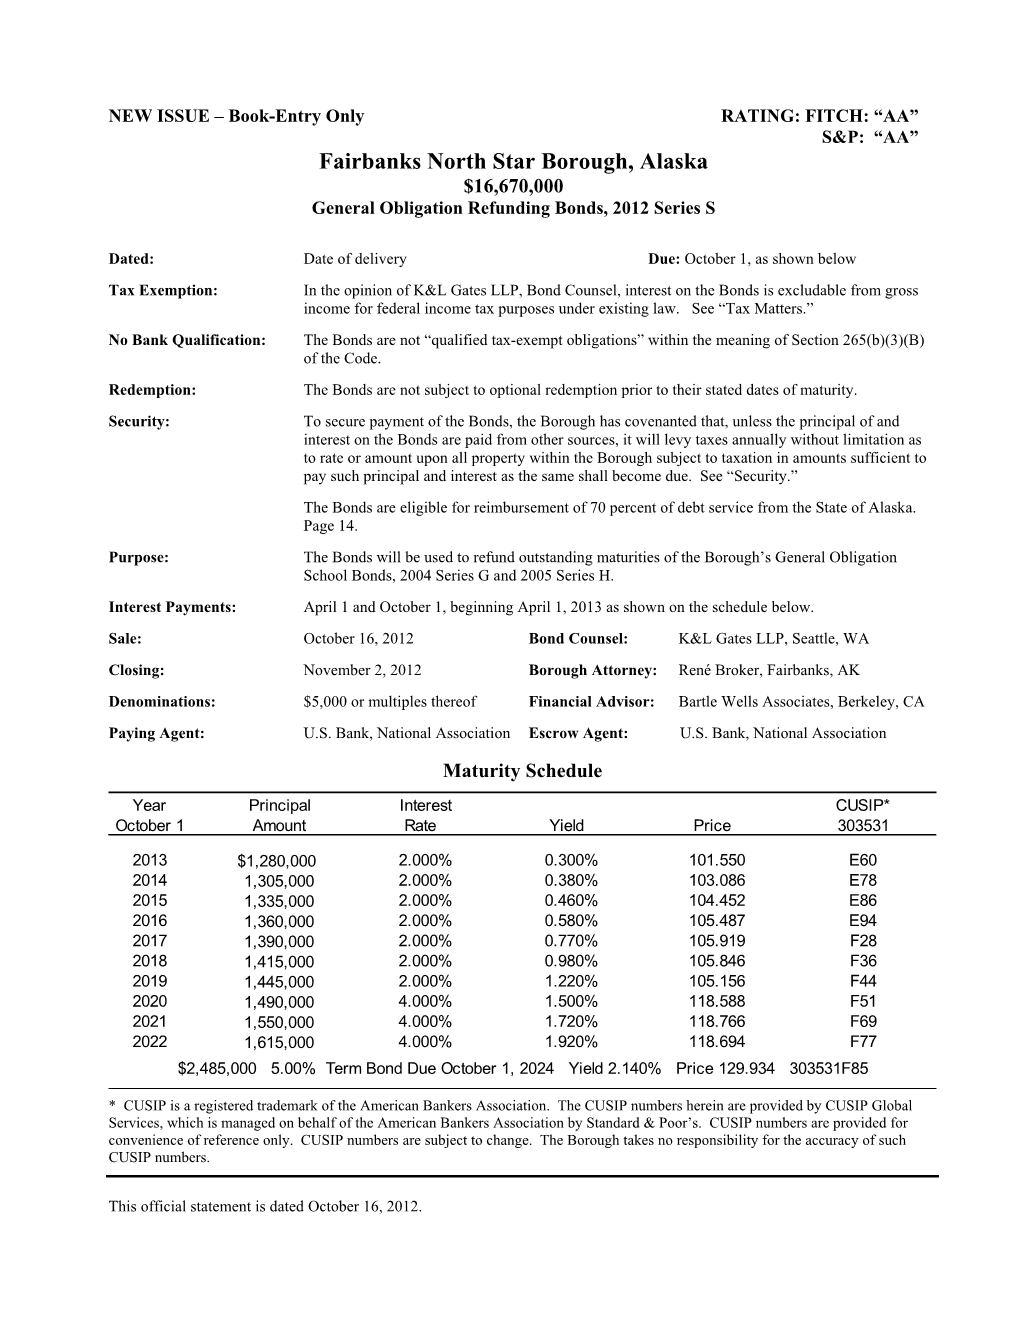 Fairbanks North Star Borough, Alaska $16,670,000 General Obligation Refunding Bonds, 2012 Series S